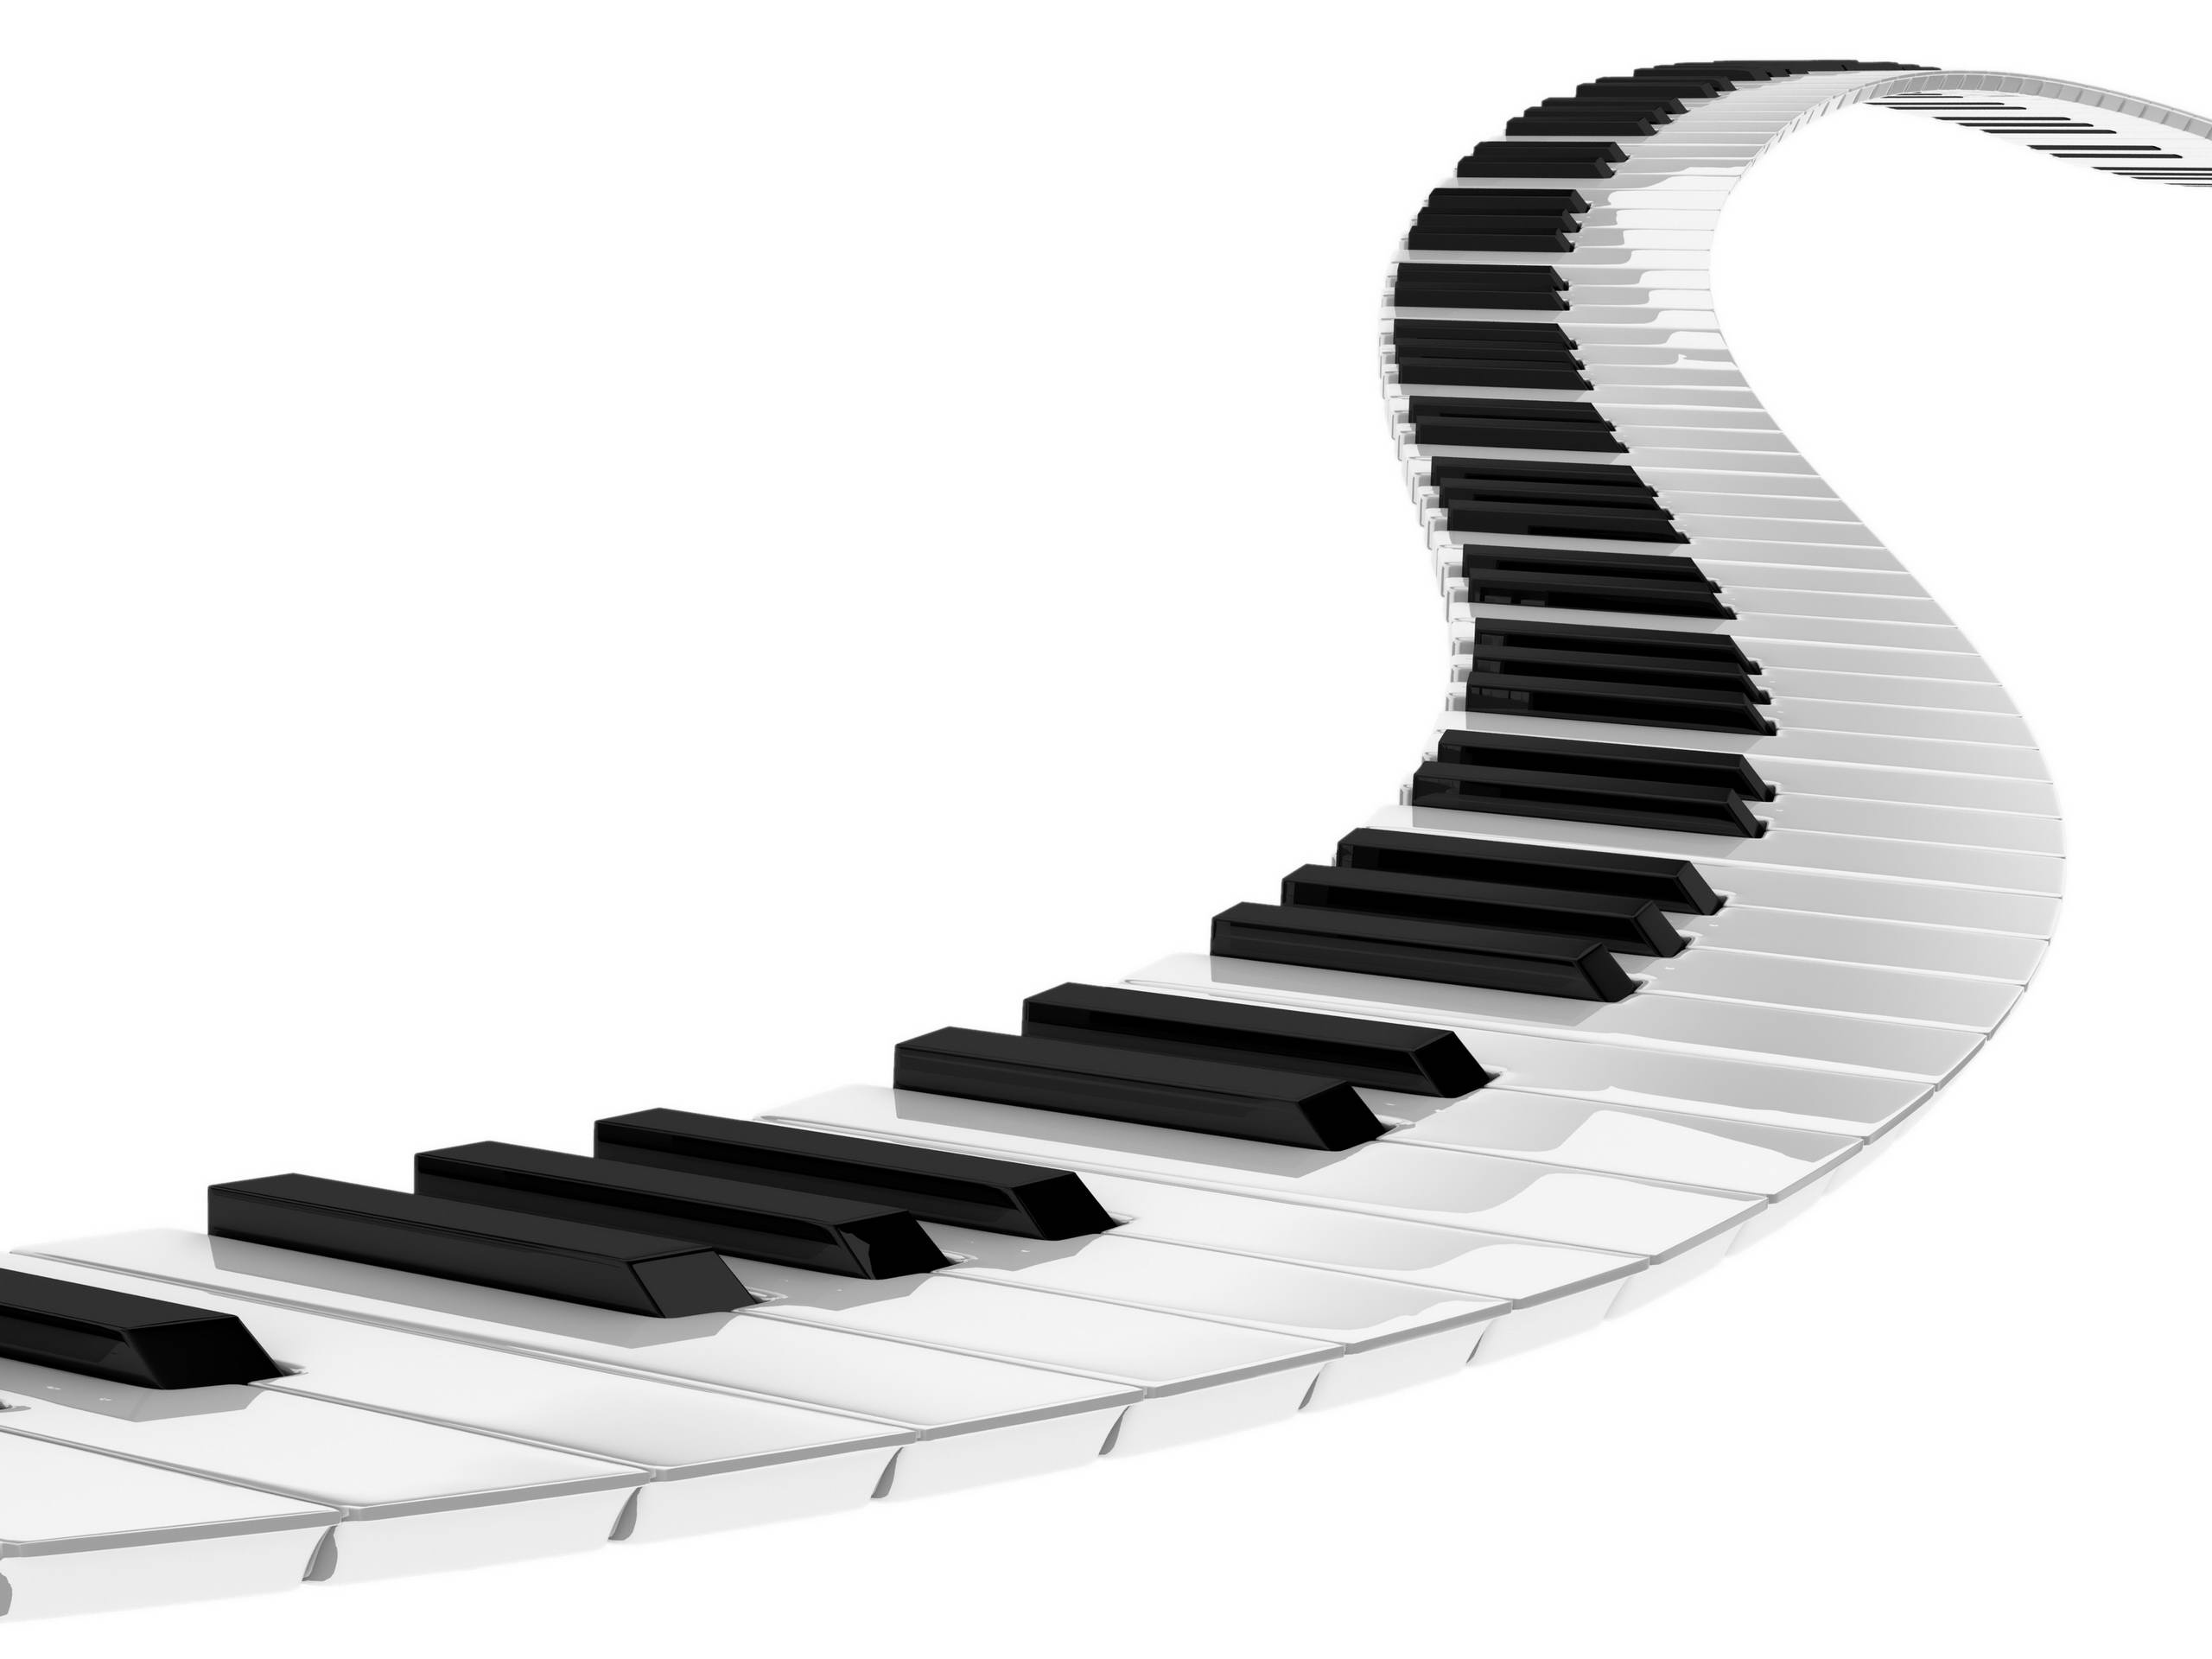 Piano Keys | Search Results | News France Dynamics